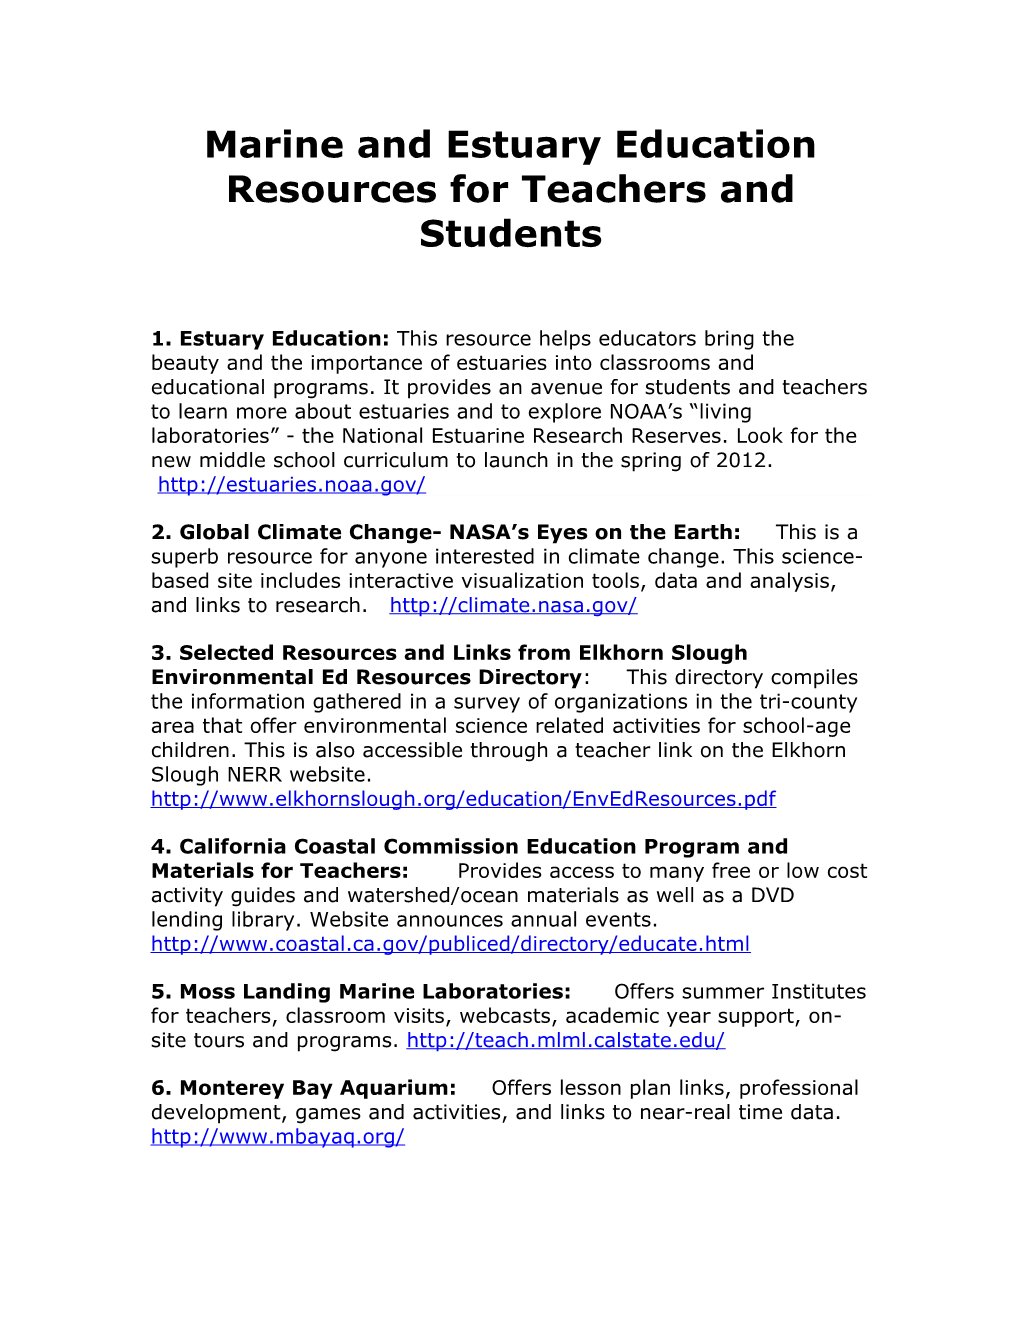 Marine Education Resources for Teachers: List in Progress